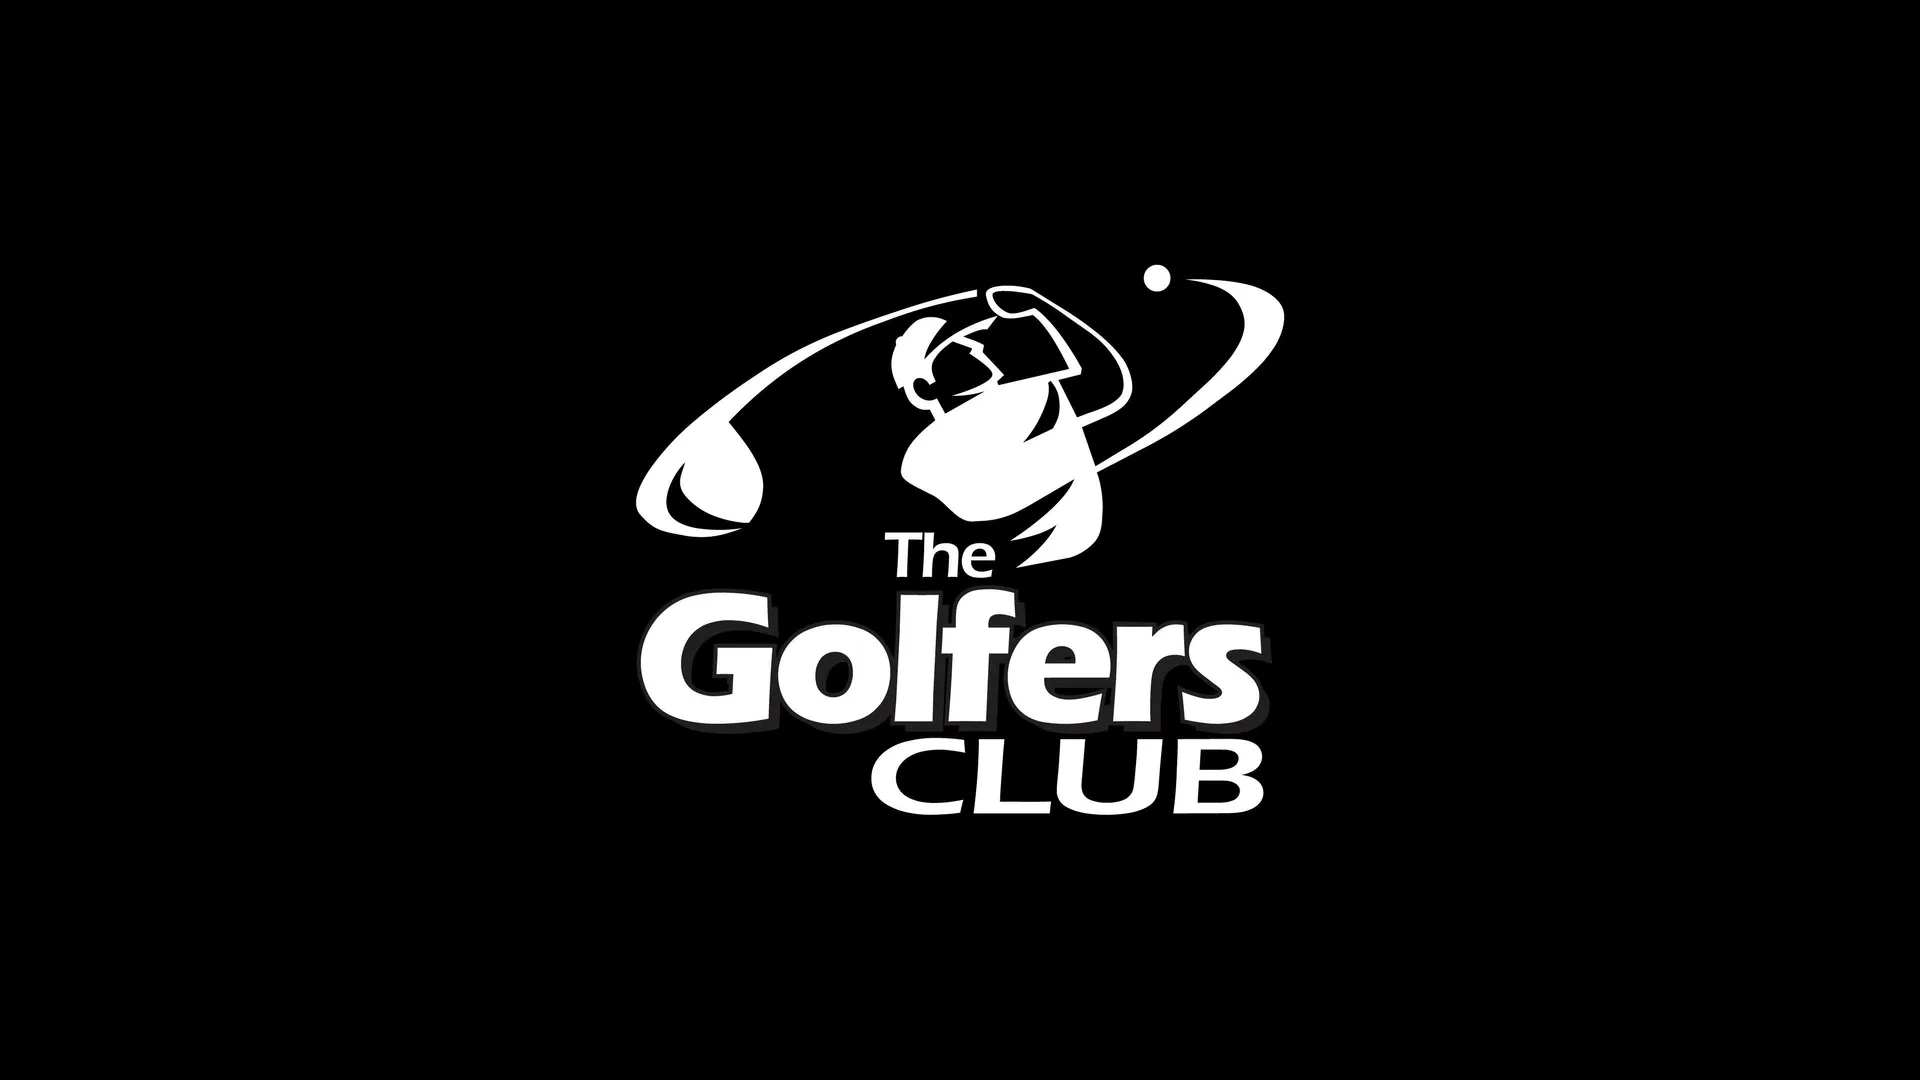 THE GOLFERS CLUB logo. Current weekly ad